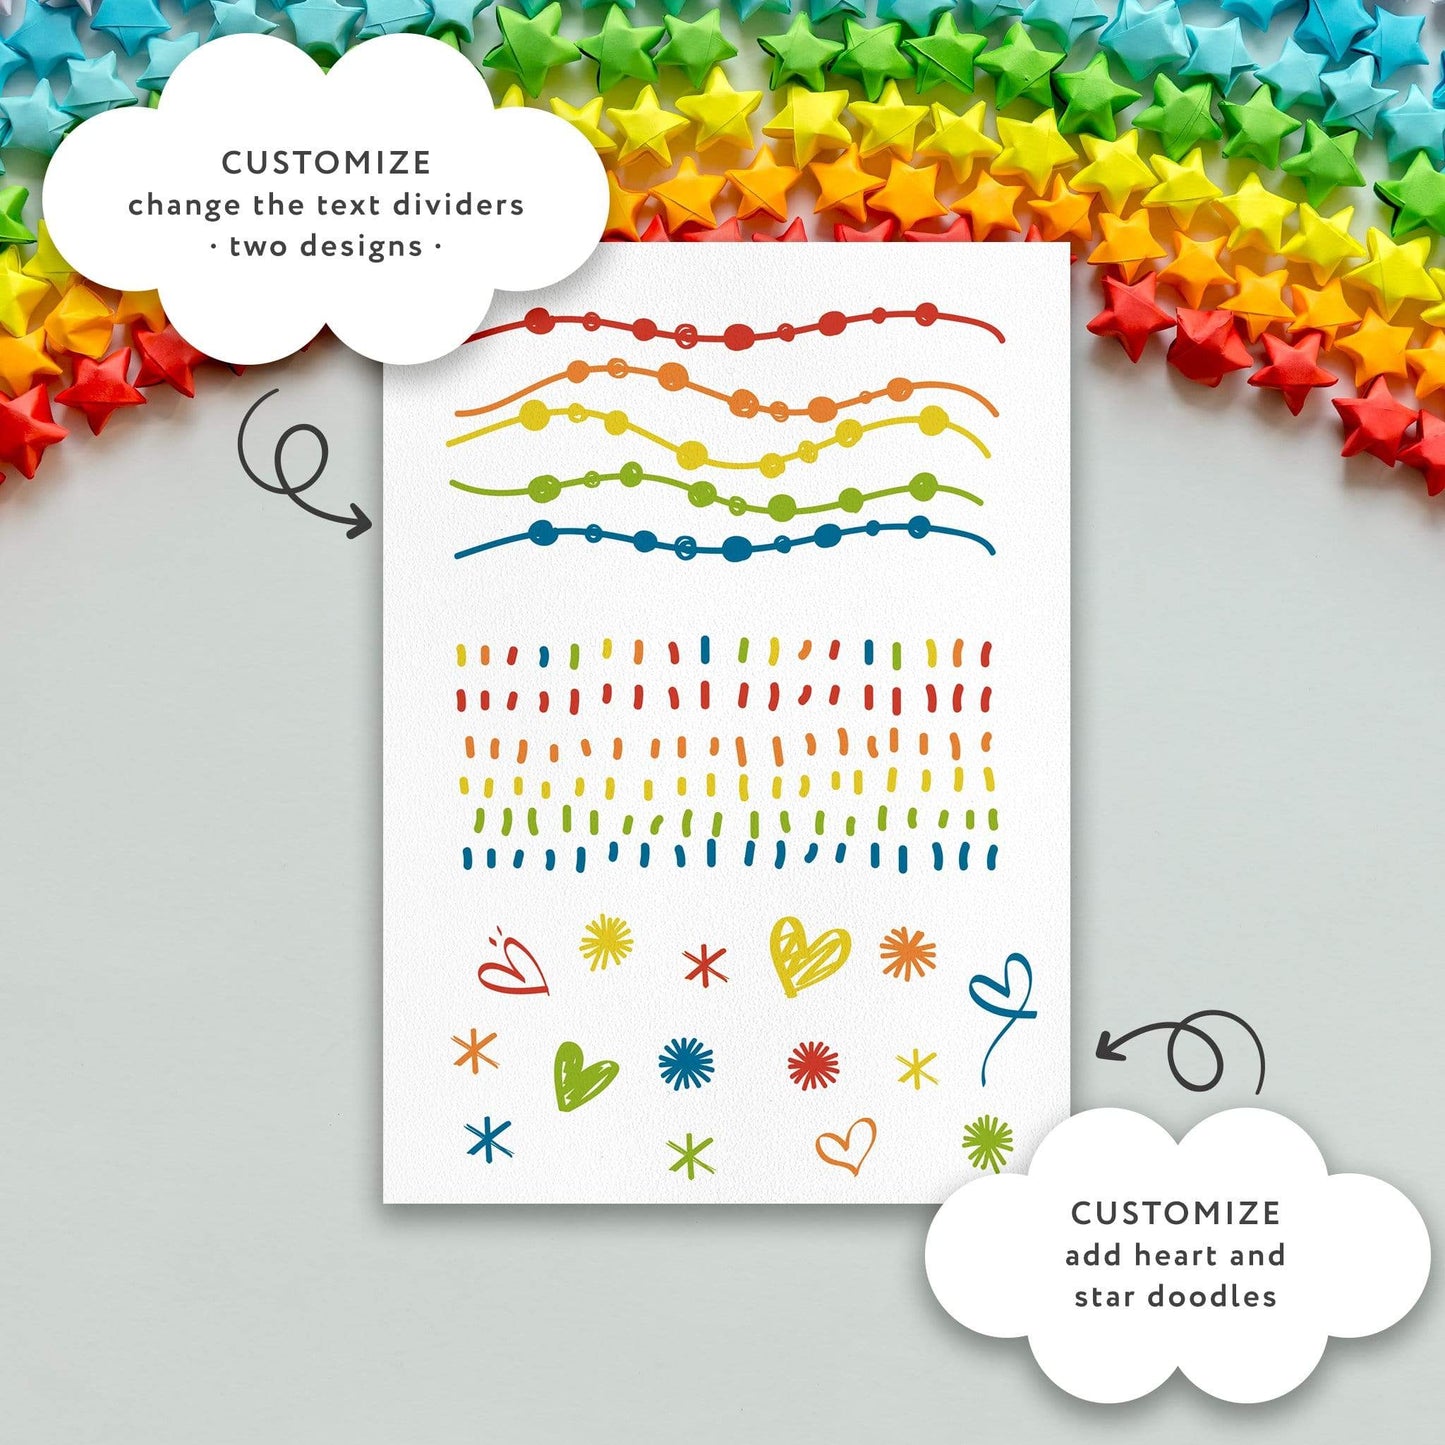 Loblolly Creative Digital Template Bright Rainbow Birthday Invitation